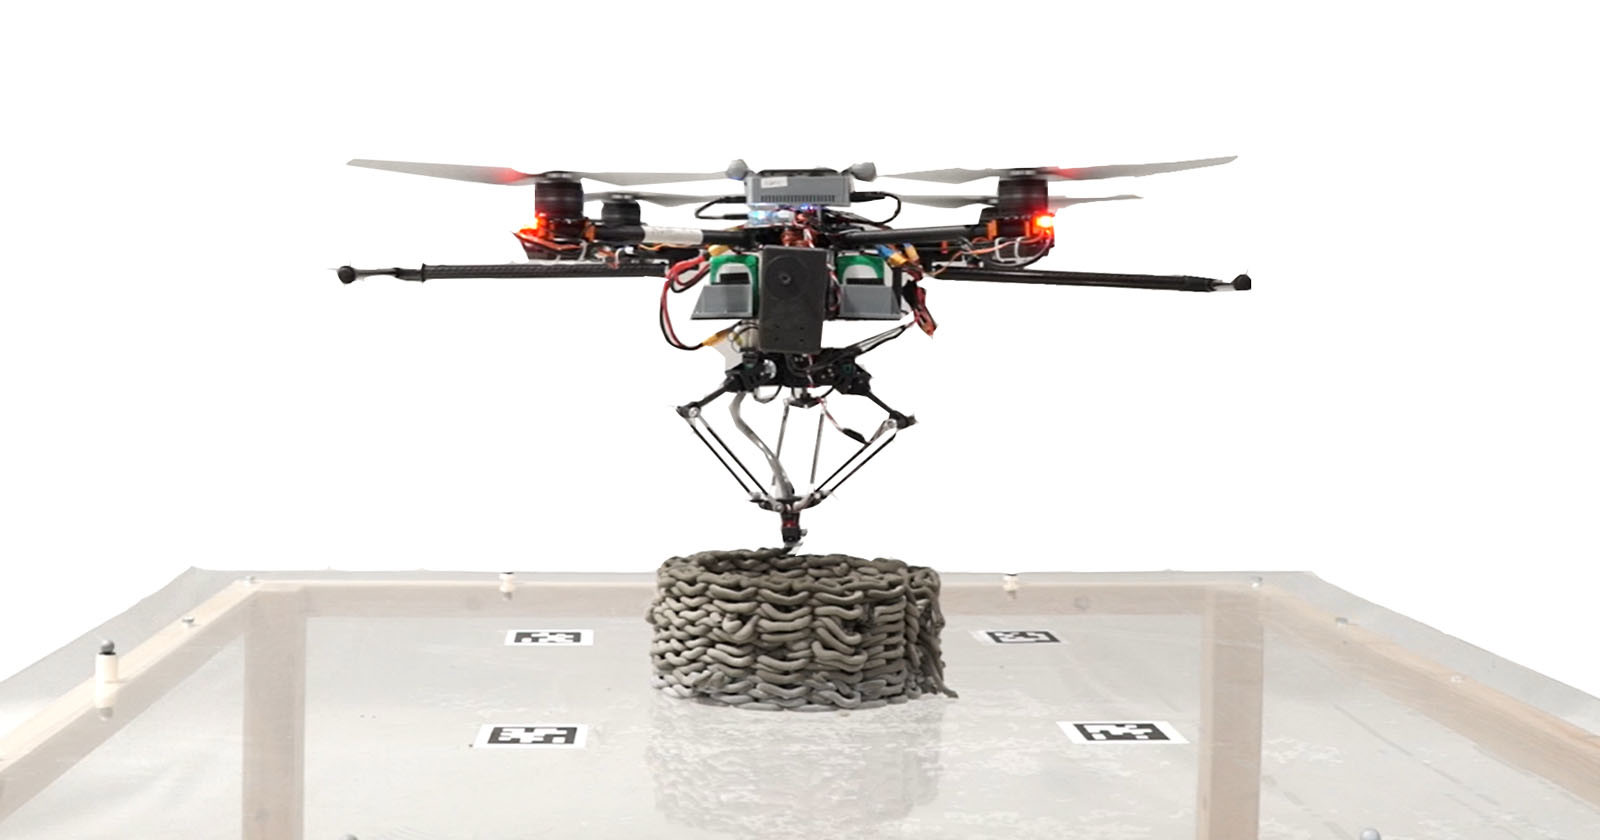 Researchers Design 3D Printing Drones to Help Rebuild Disaster Zones